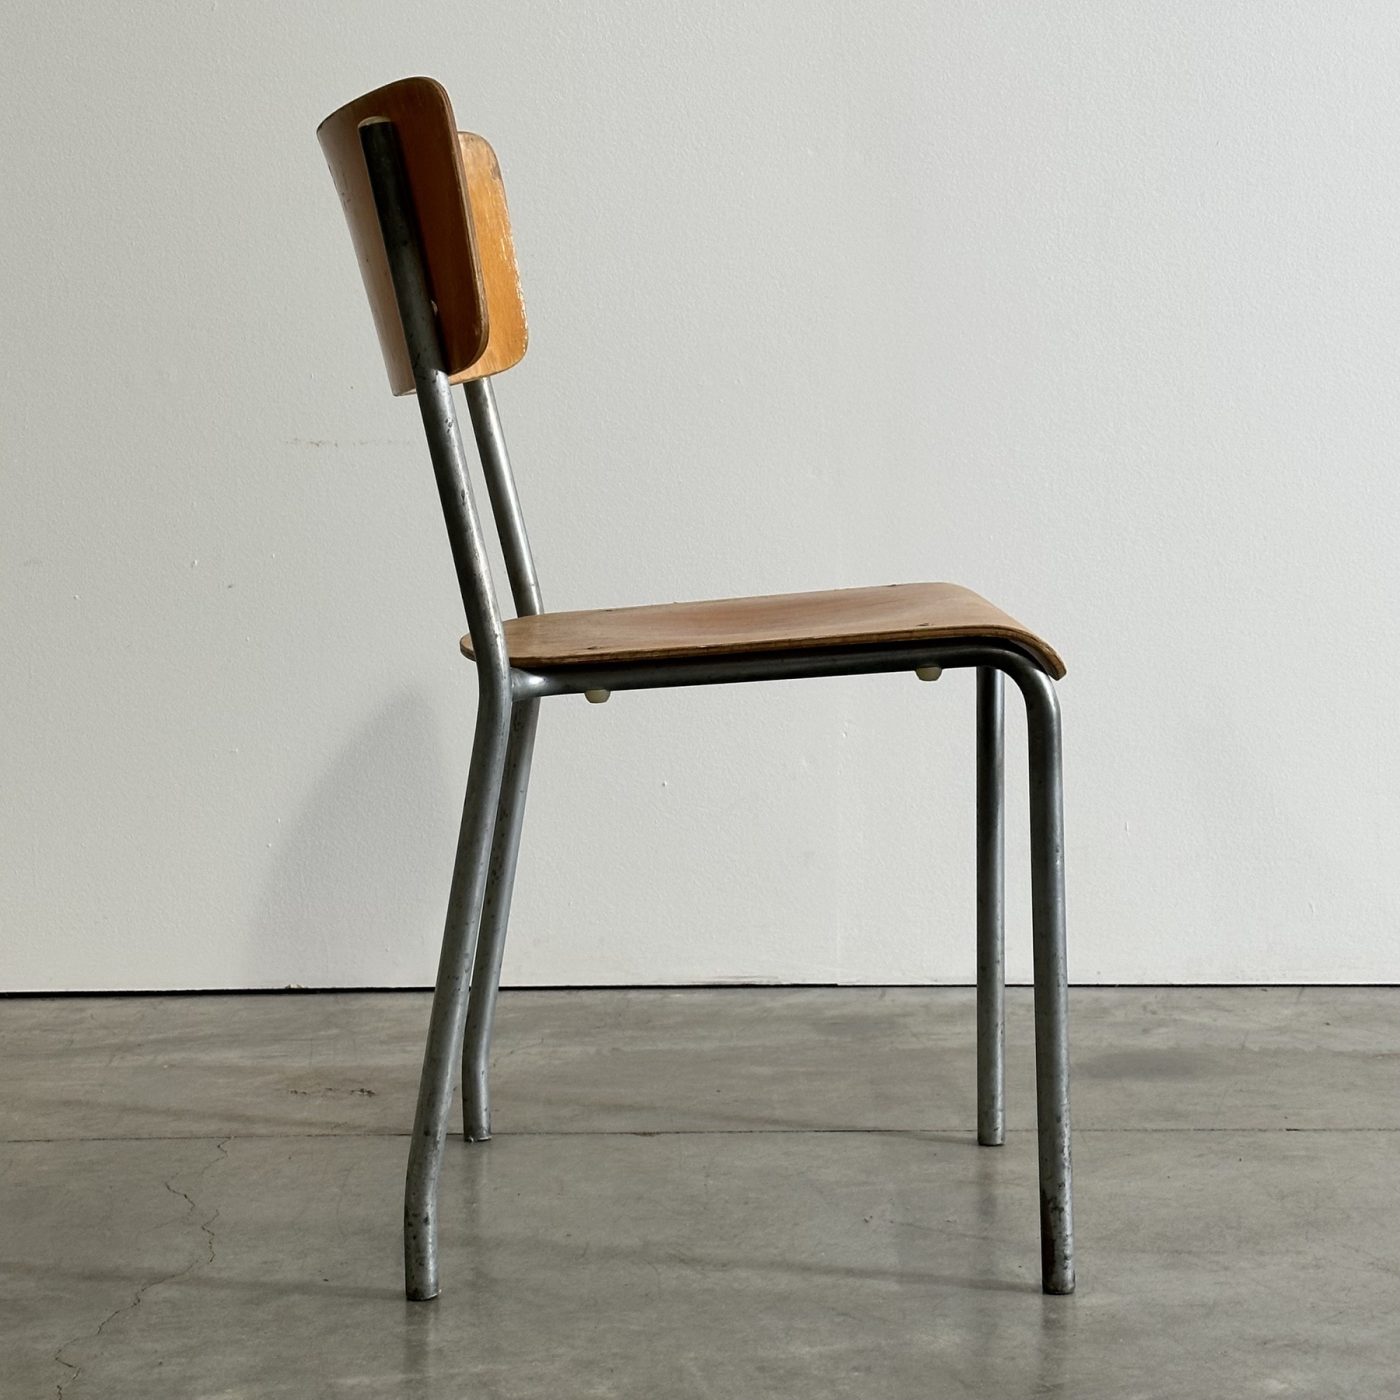 objet-vagabond-school-chairs0003